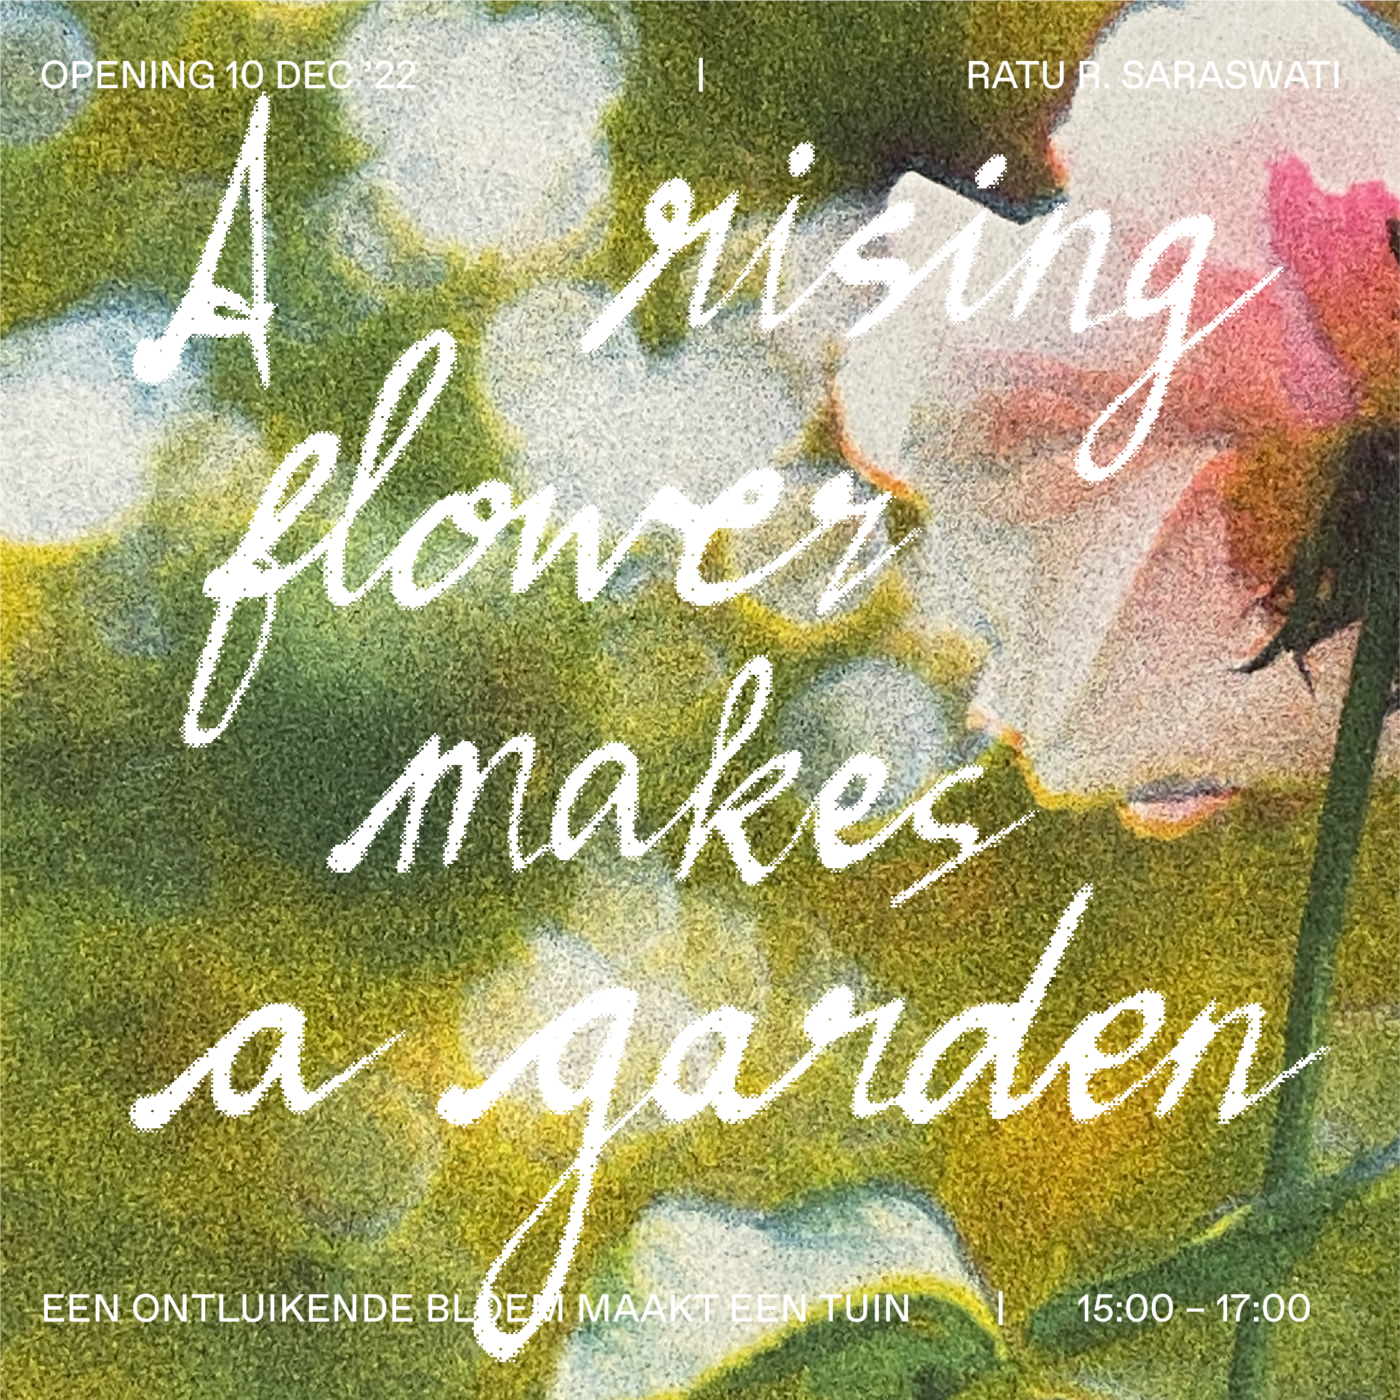 'A rising flower makes a garden' / Ratu R. Saraswati